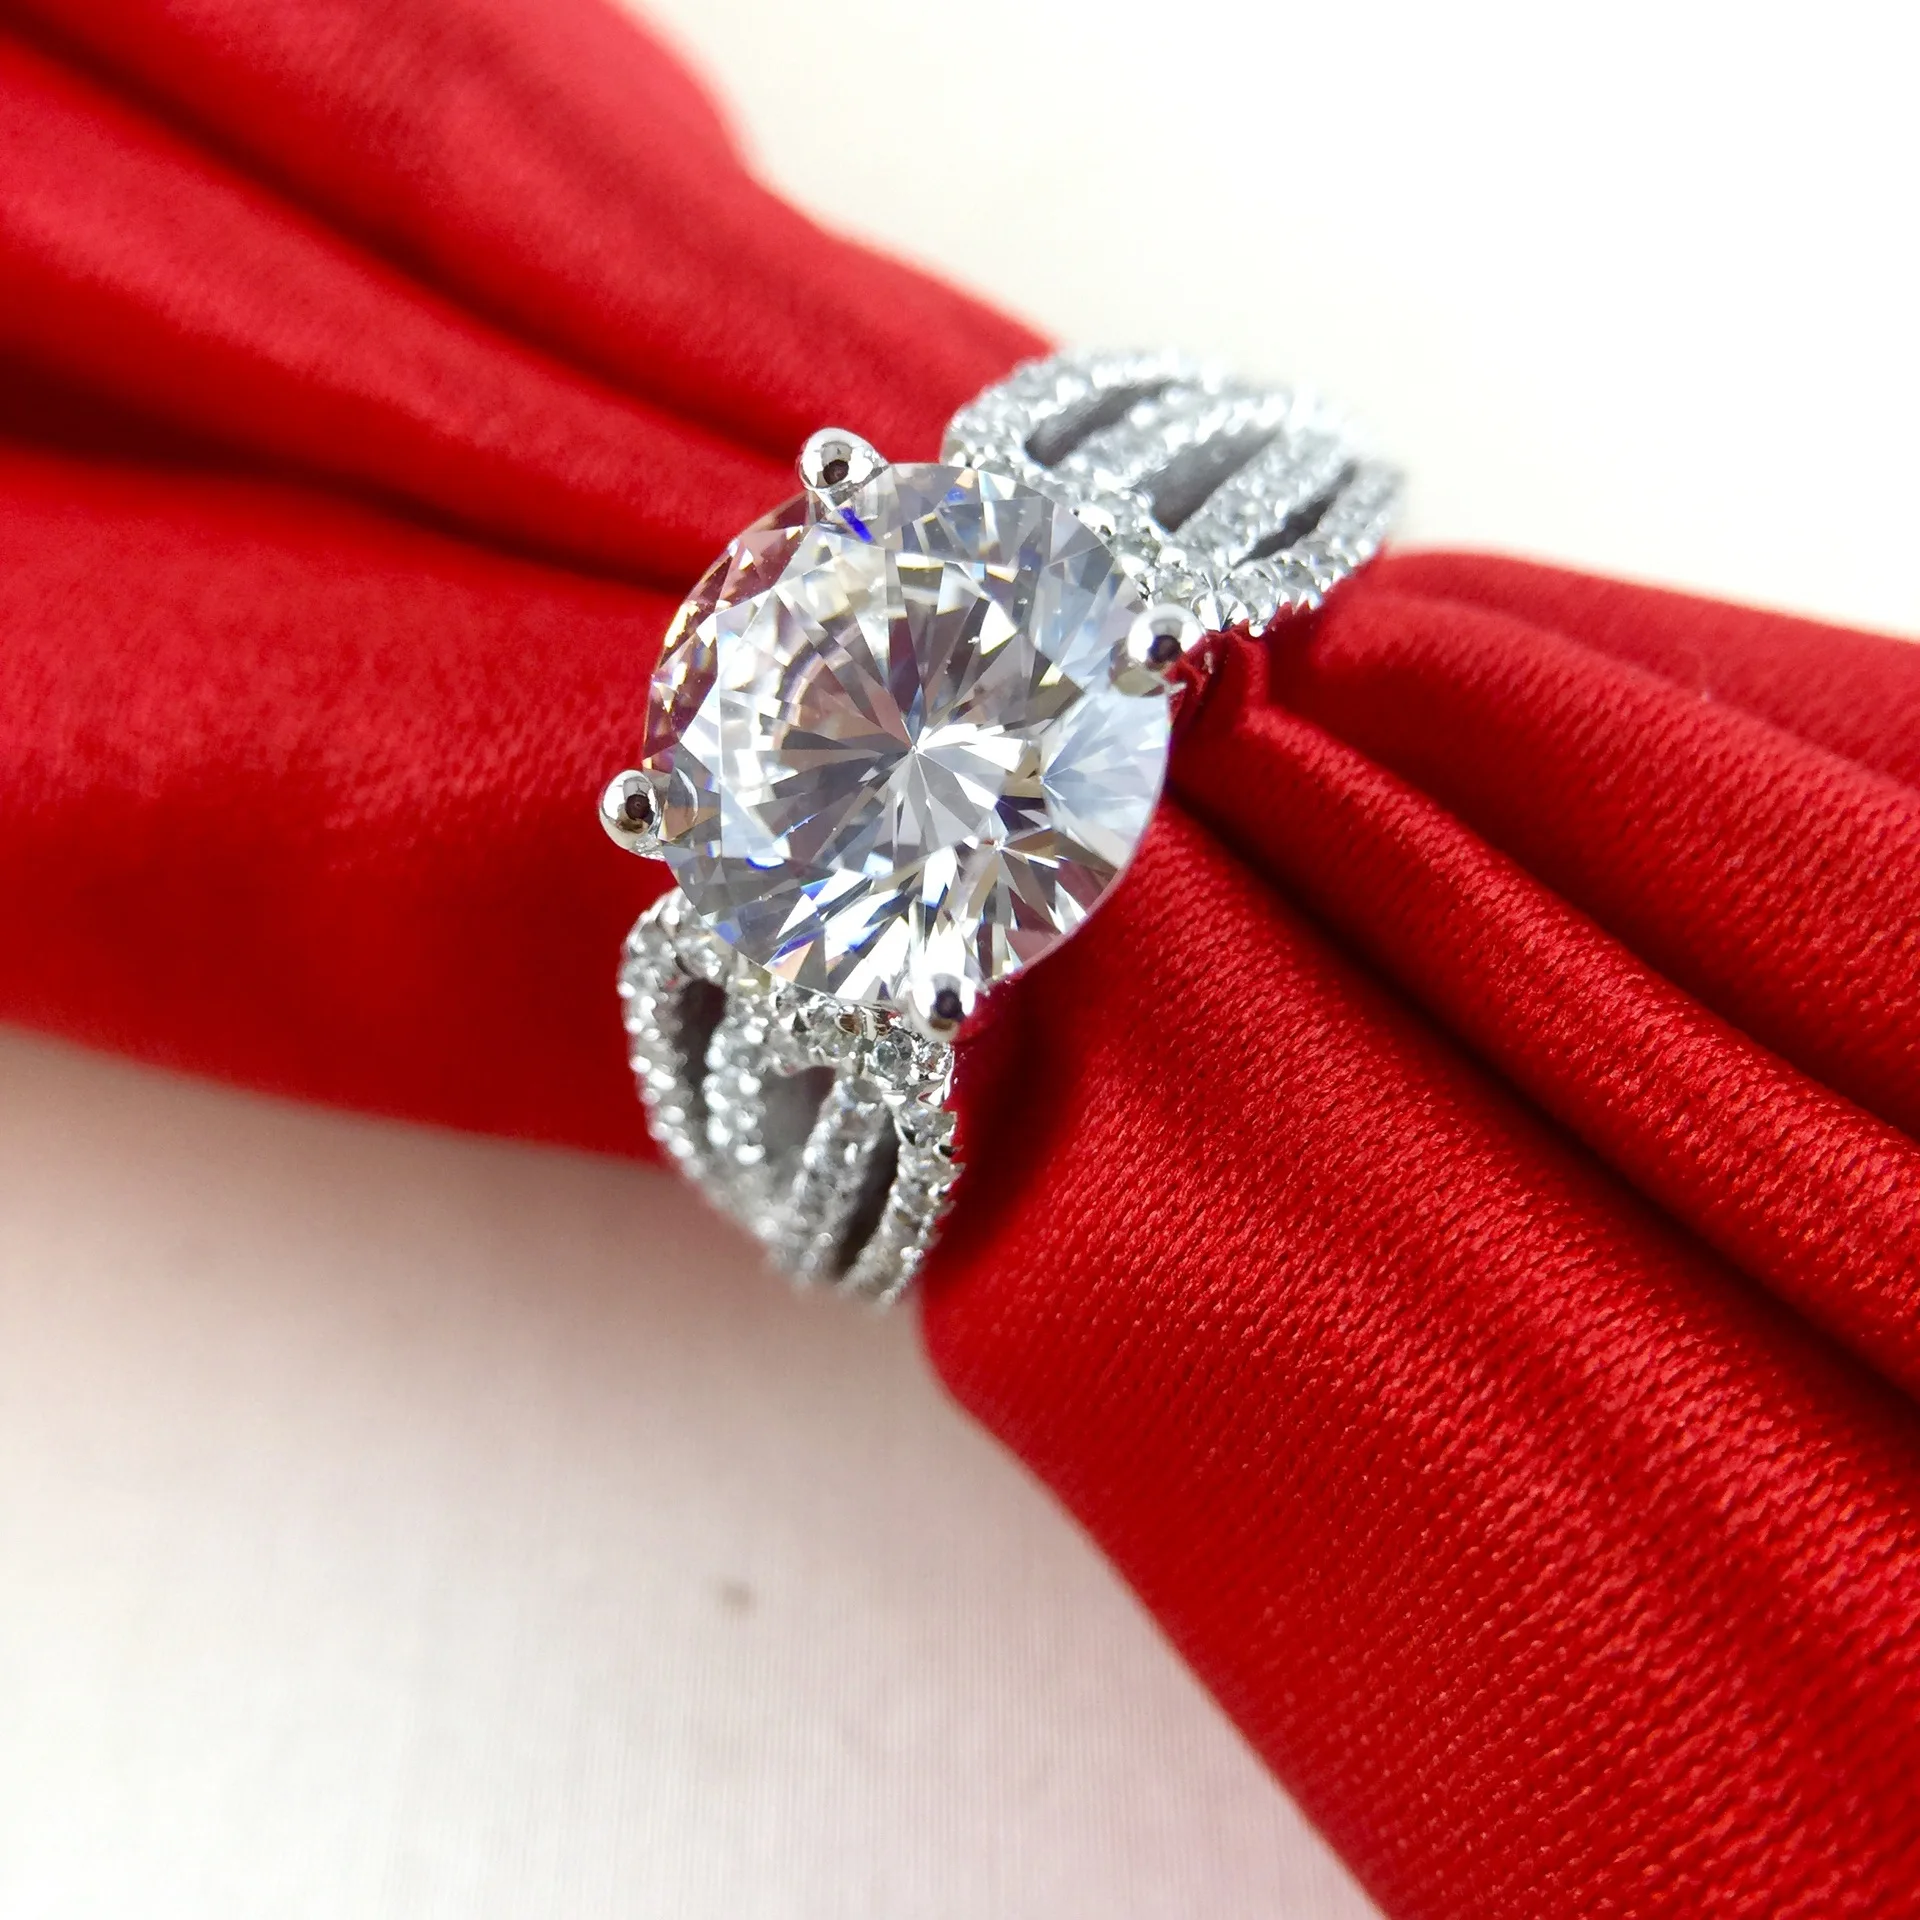 Original 3 carat silver man made diamond ring jewelry engagement anniversary ring for women (JSA)